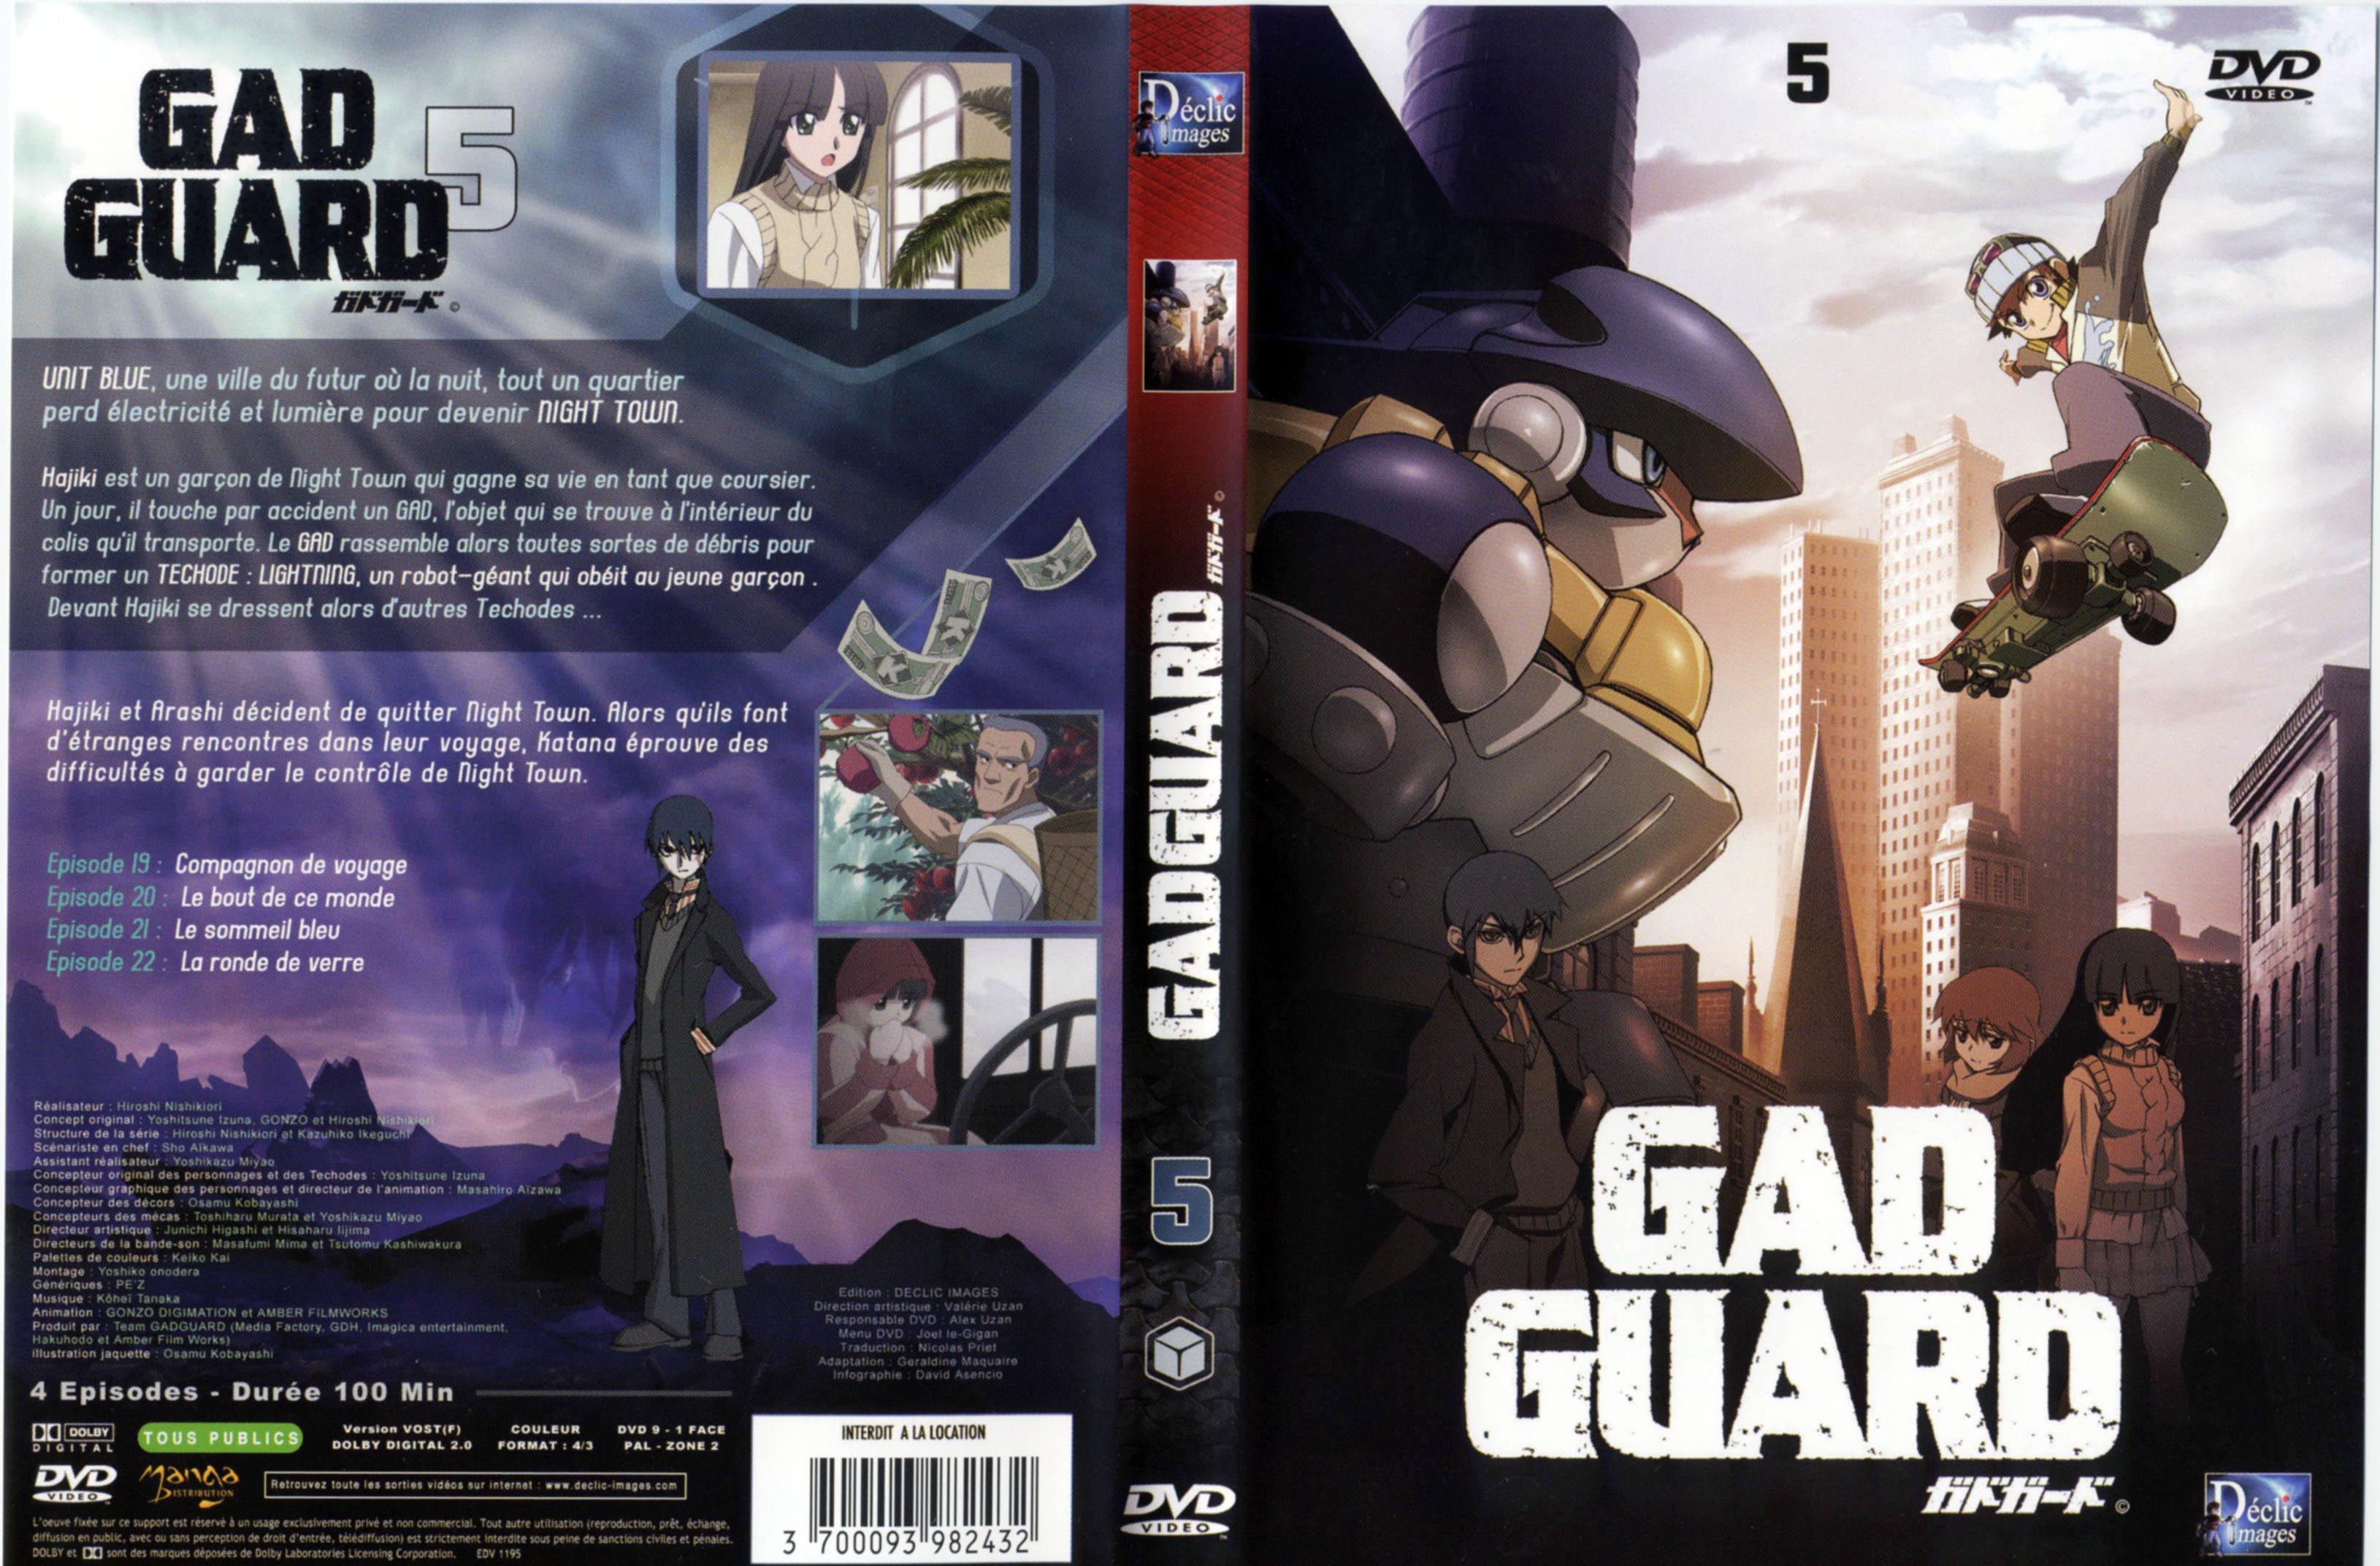 Jaquette DVD Gad Guard DVD 5